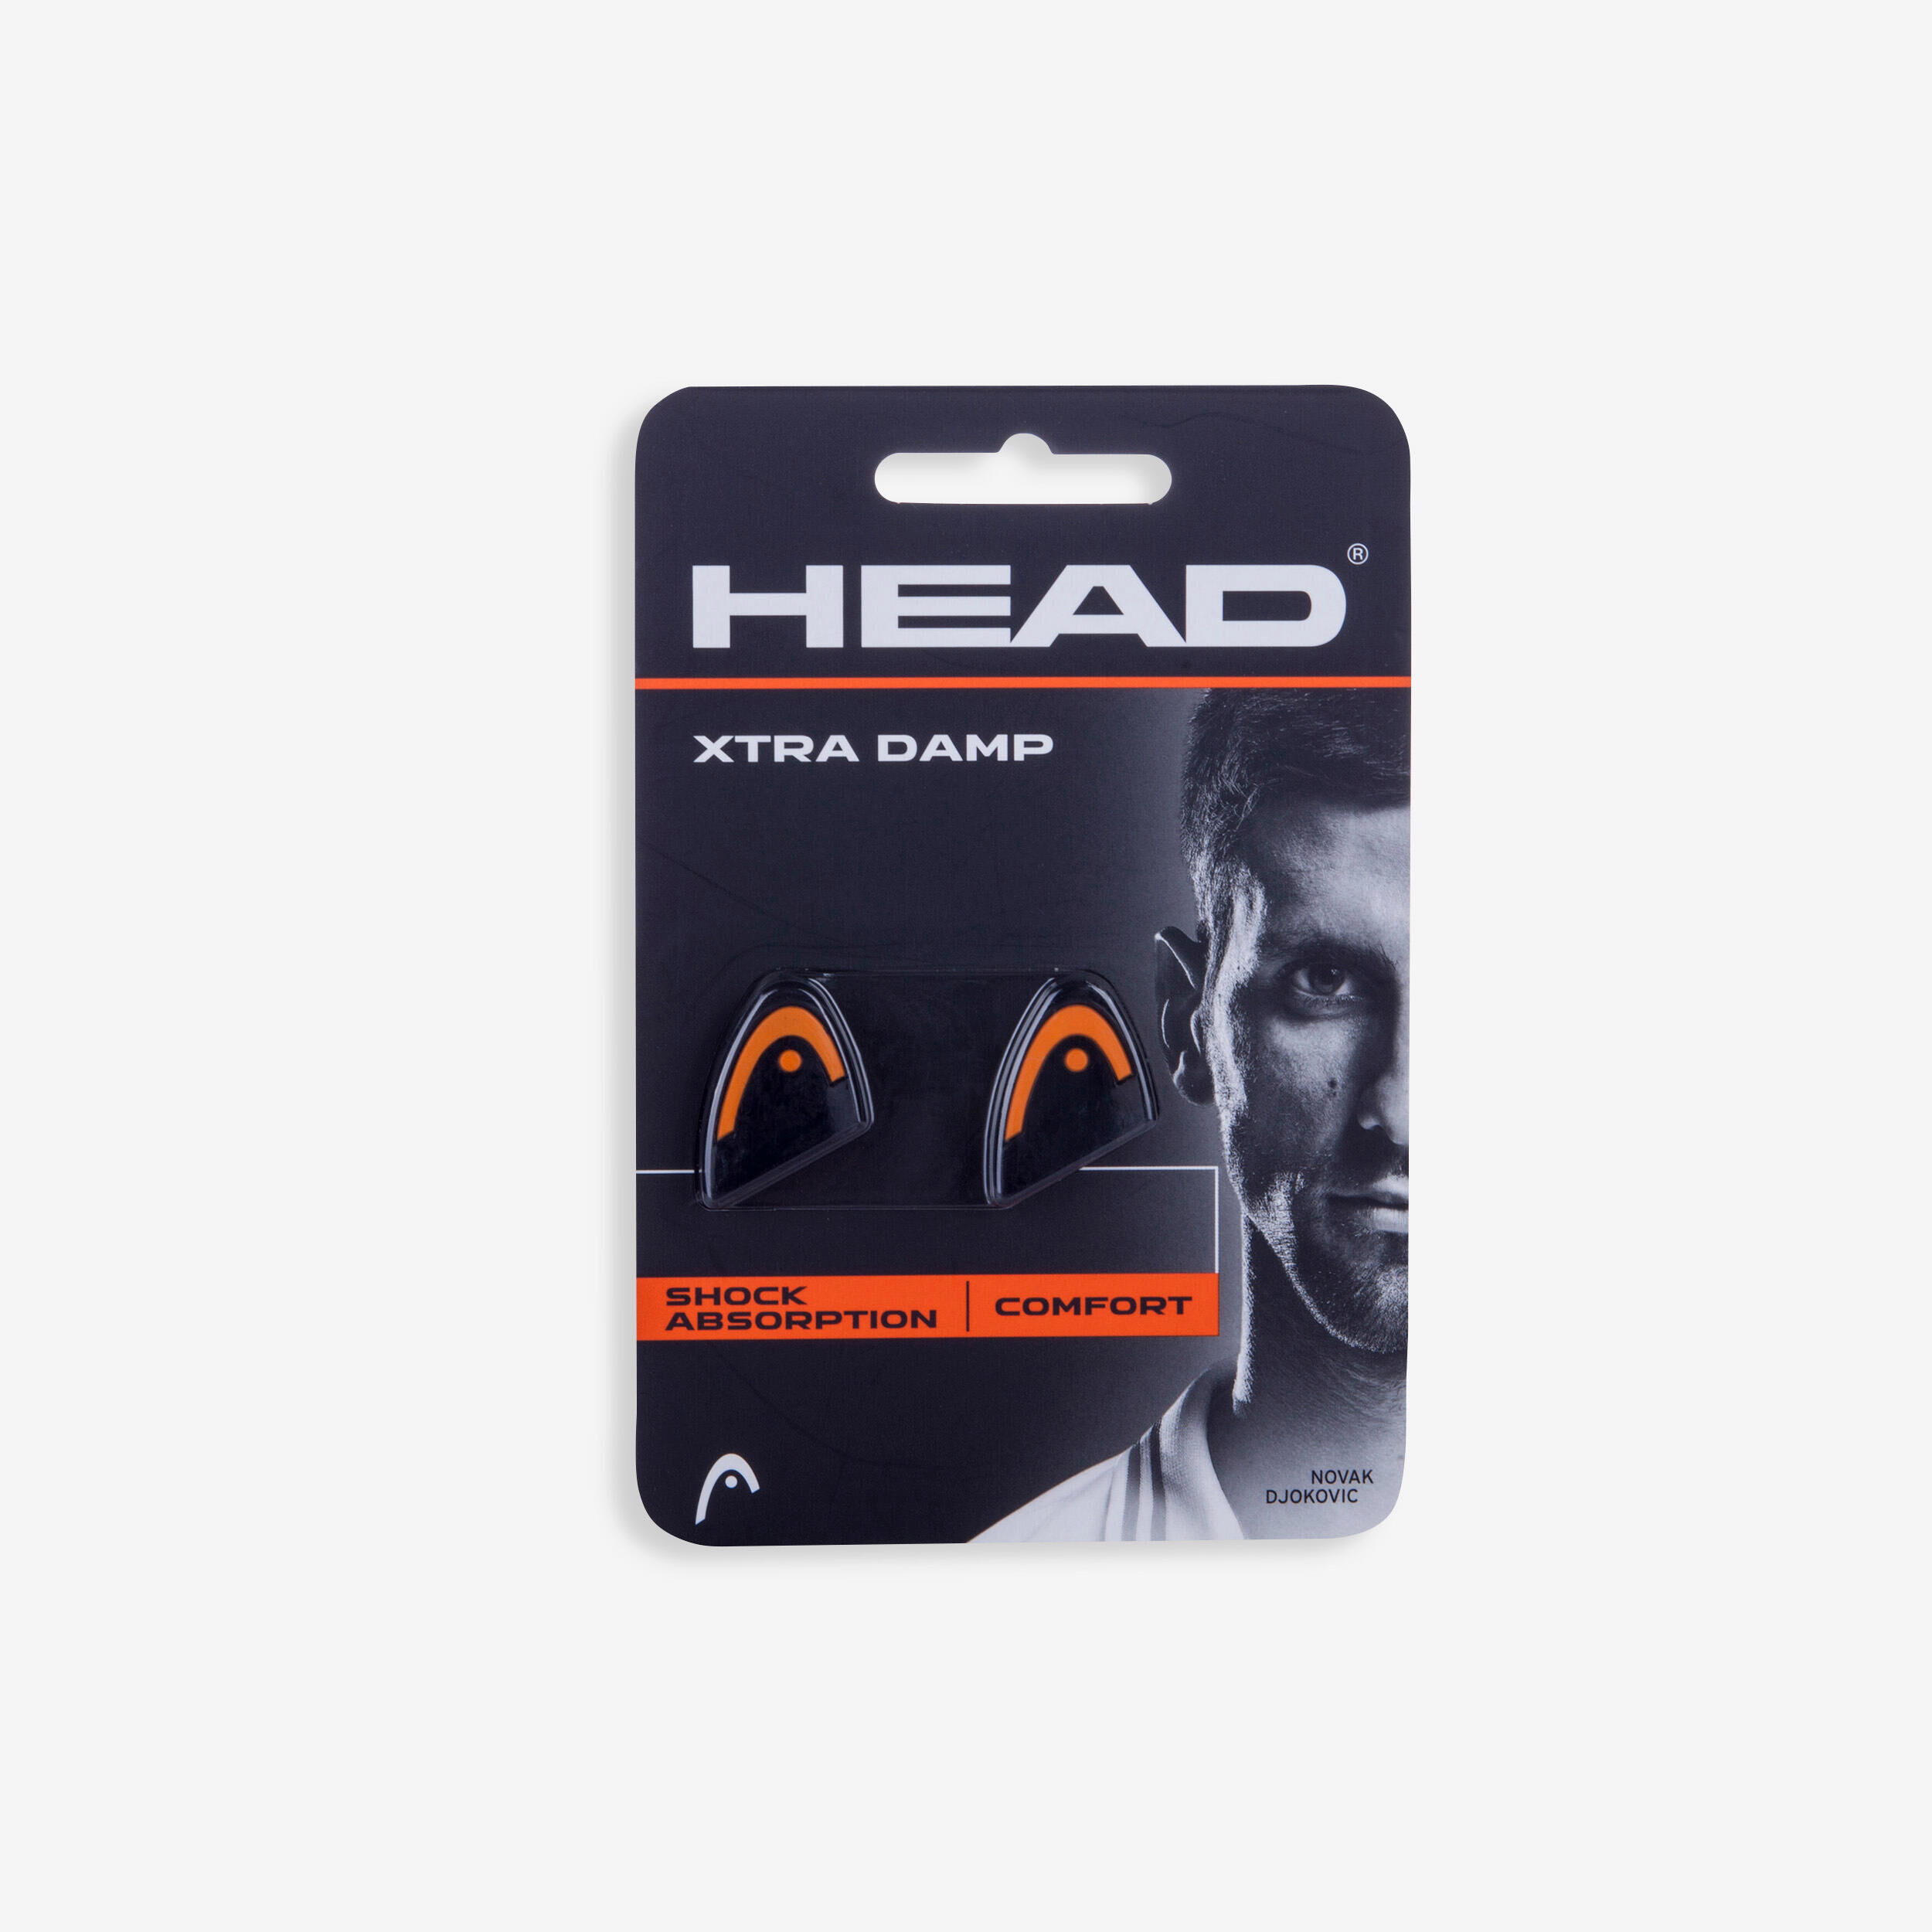 HEAD Xtra Damp Tennis Vibration Dampener - Black/Orange